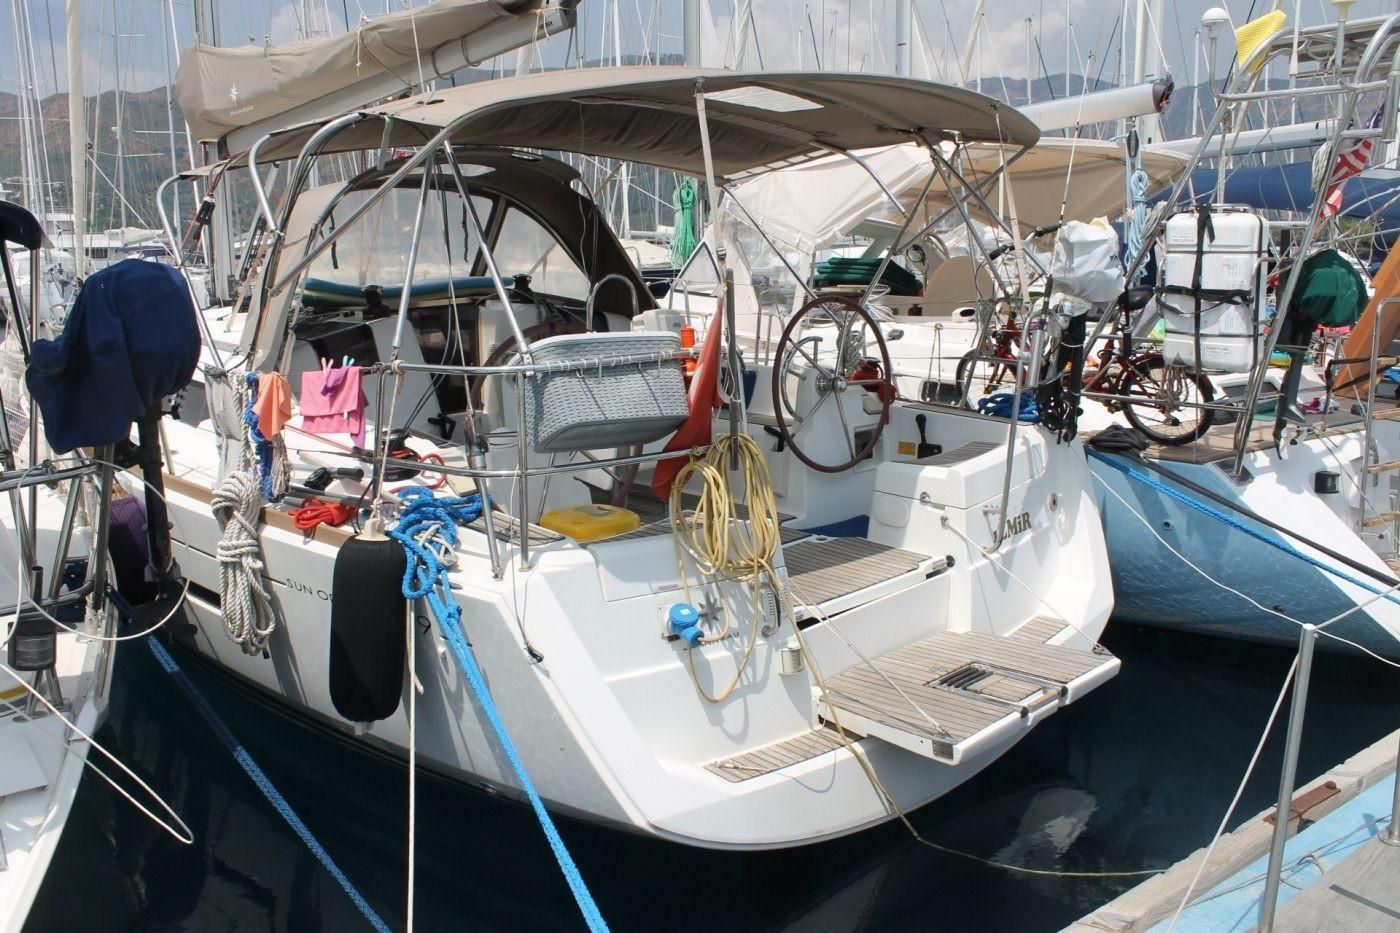 2012 Jeanneau Sun Odyssey 379 Sail Boat For Sale Wwwyachtworldcom